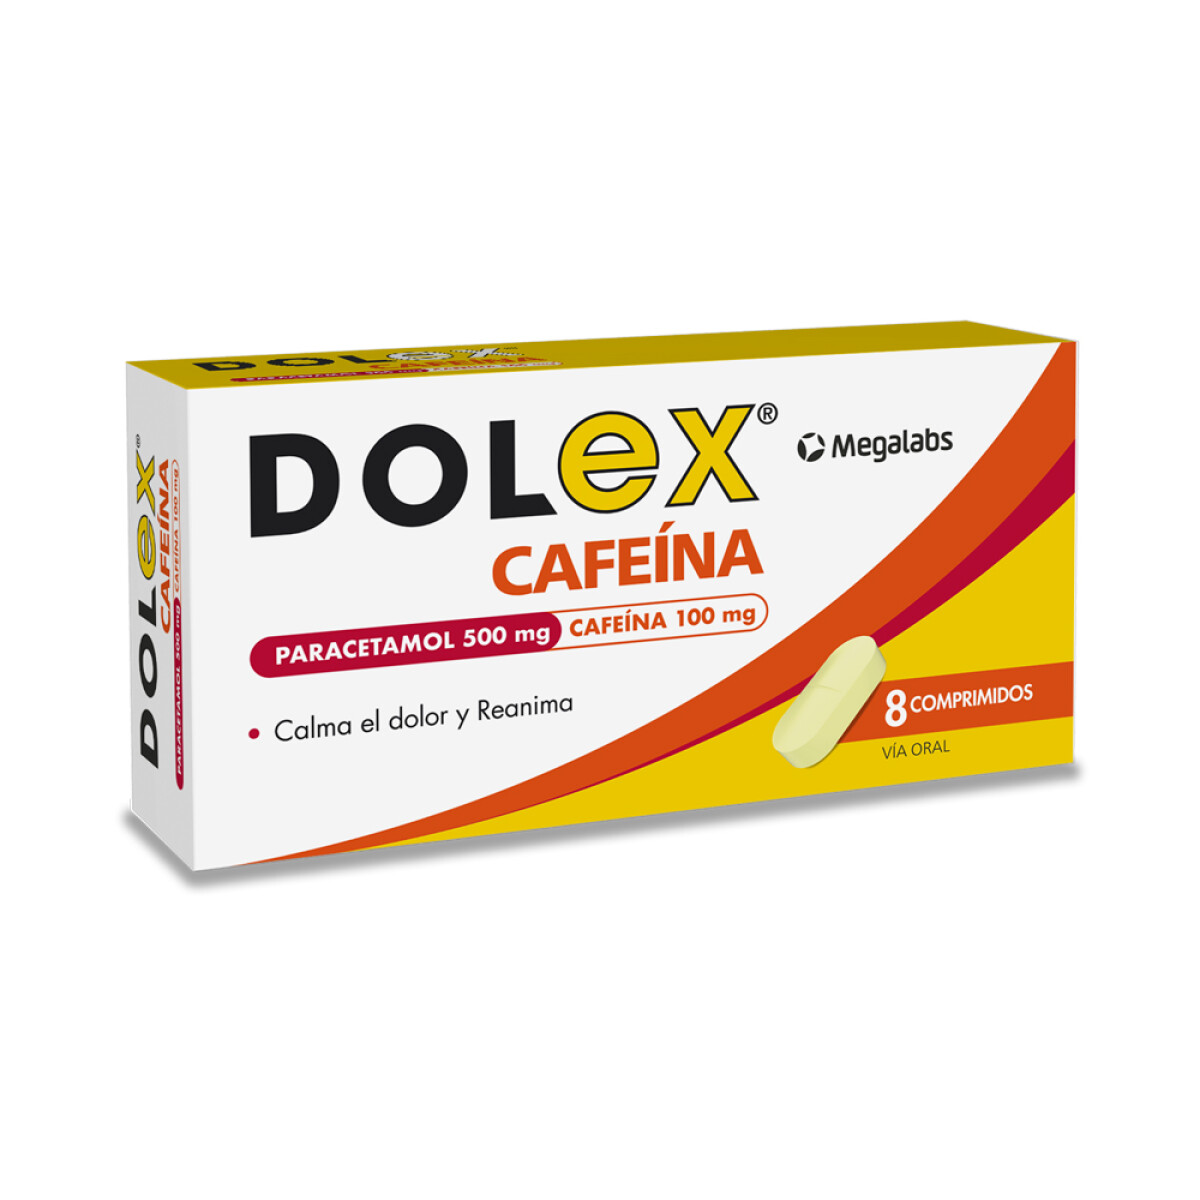 DOLEX CAFEINA 8 COMPRIMIDOS 